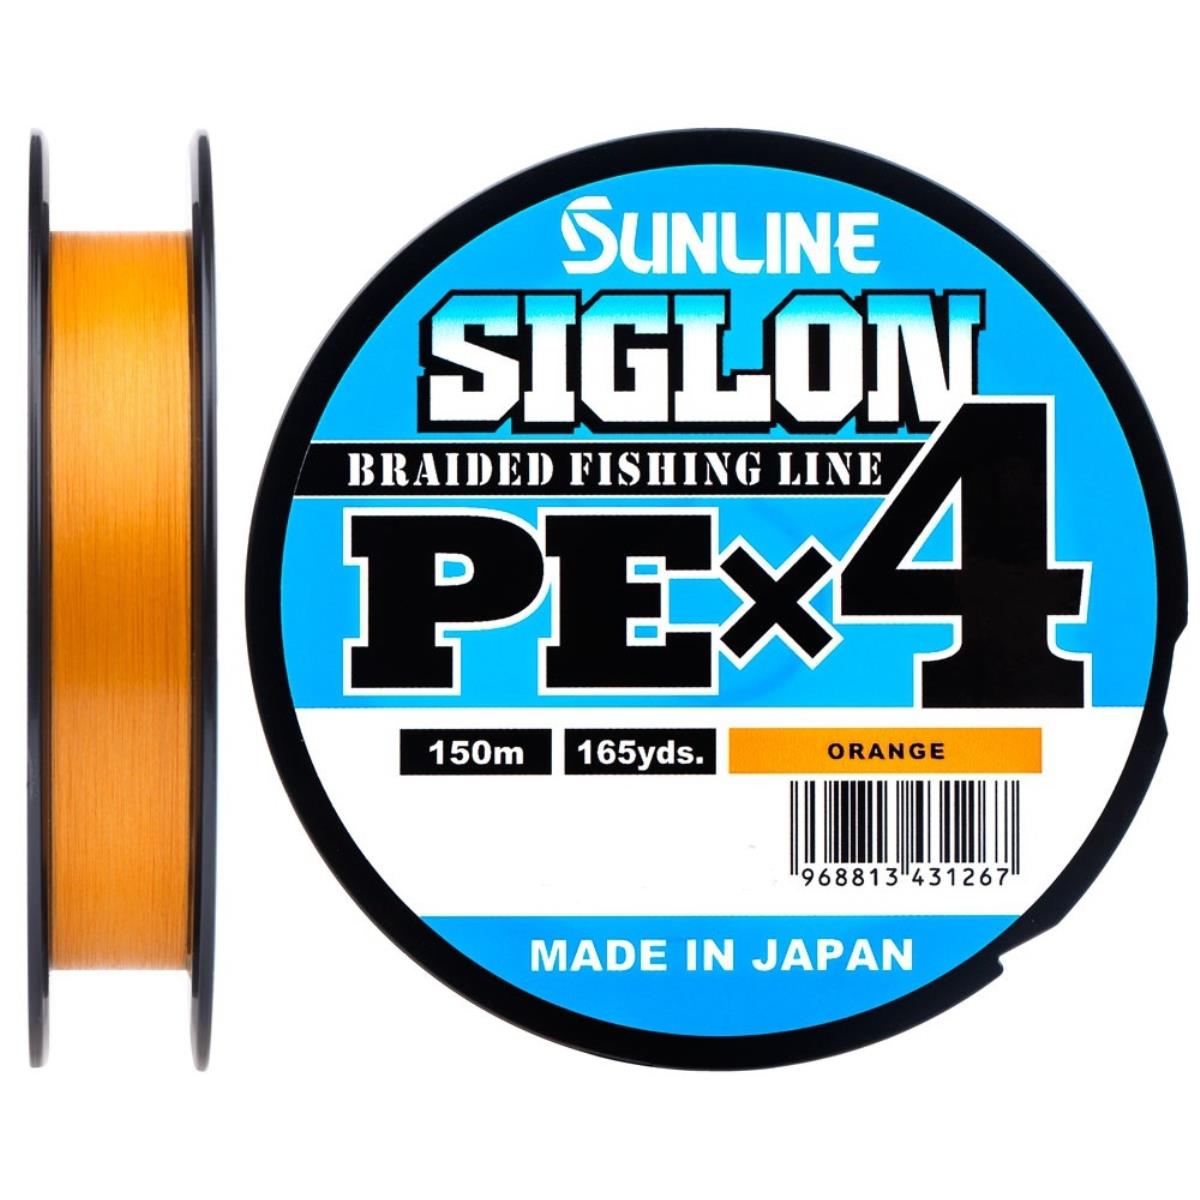 флюрокарбон fc 2020 50 м sunline Шнур SIGLON PE×4 150 м (Orange) Sunline